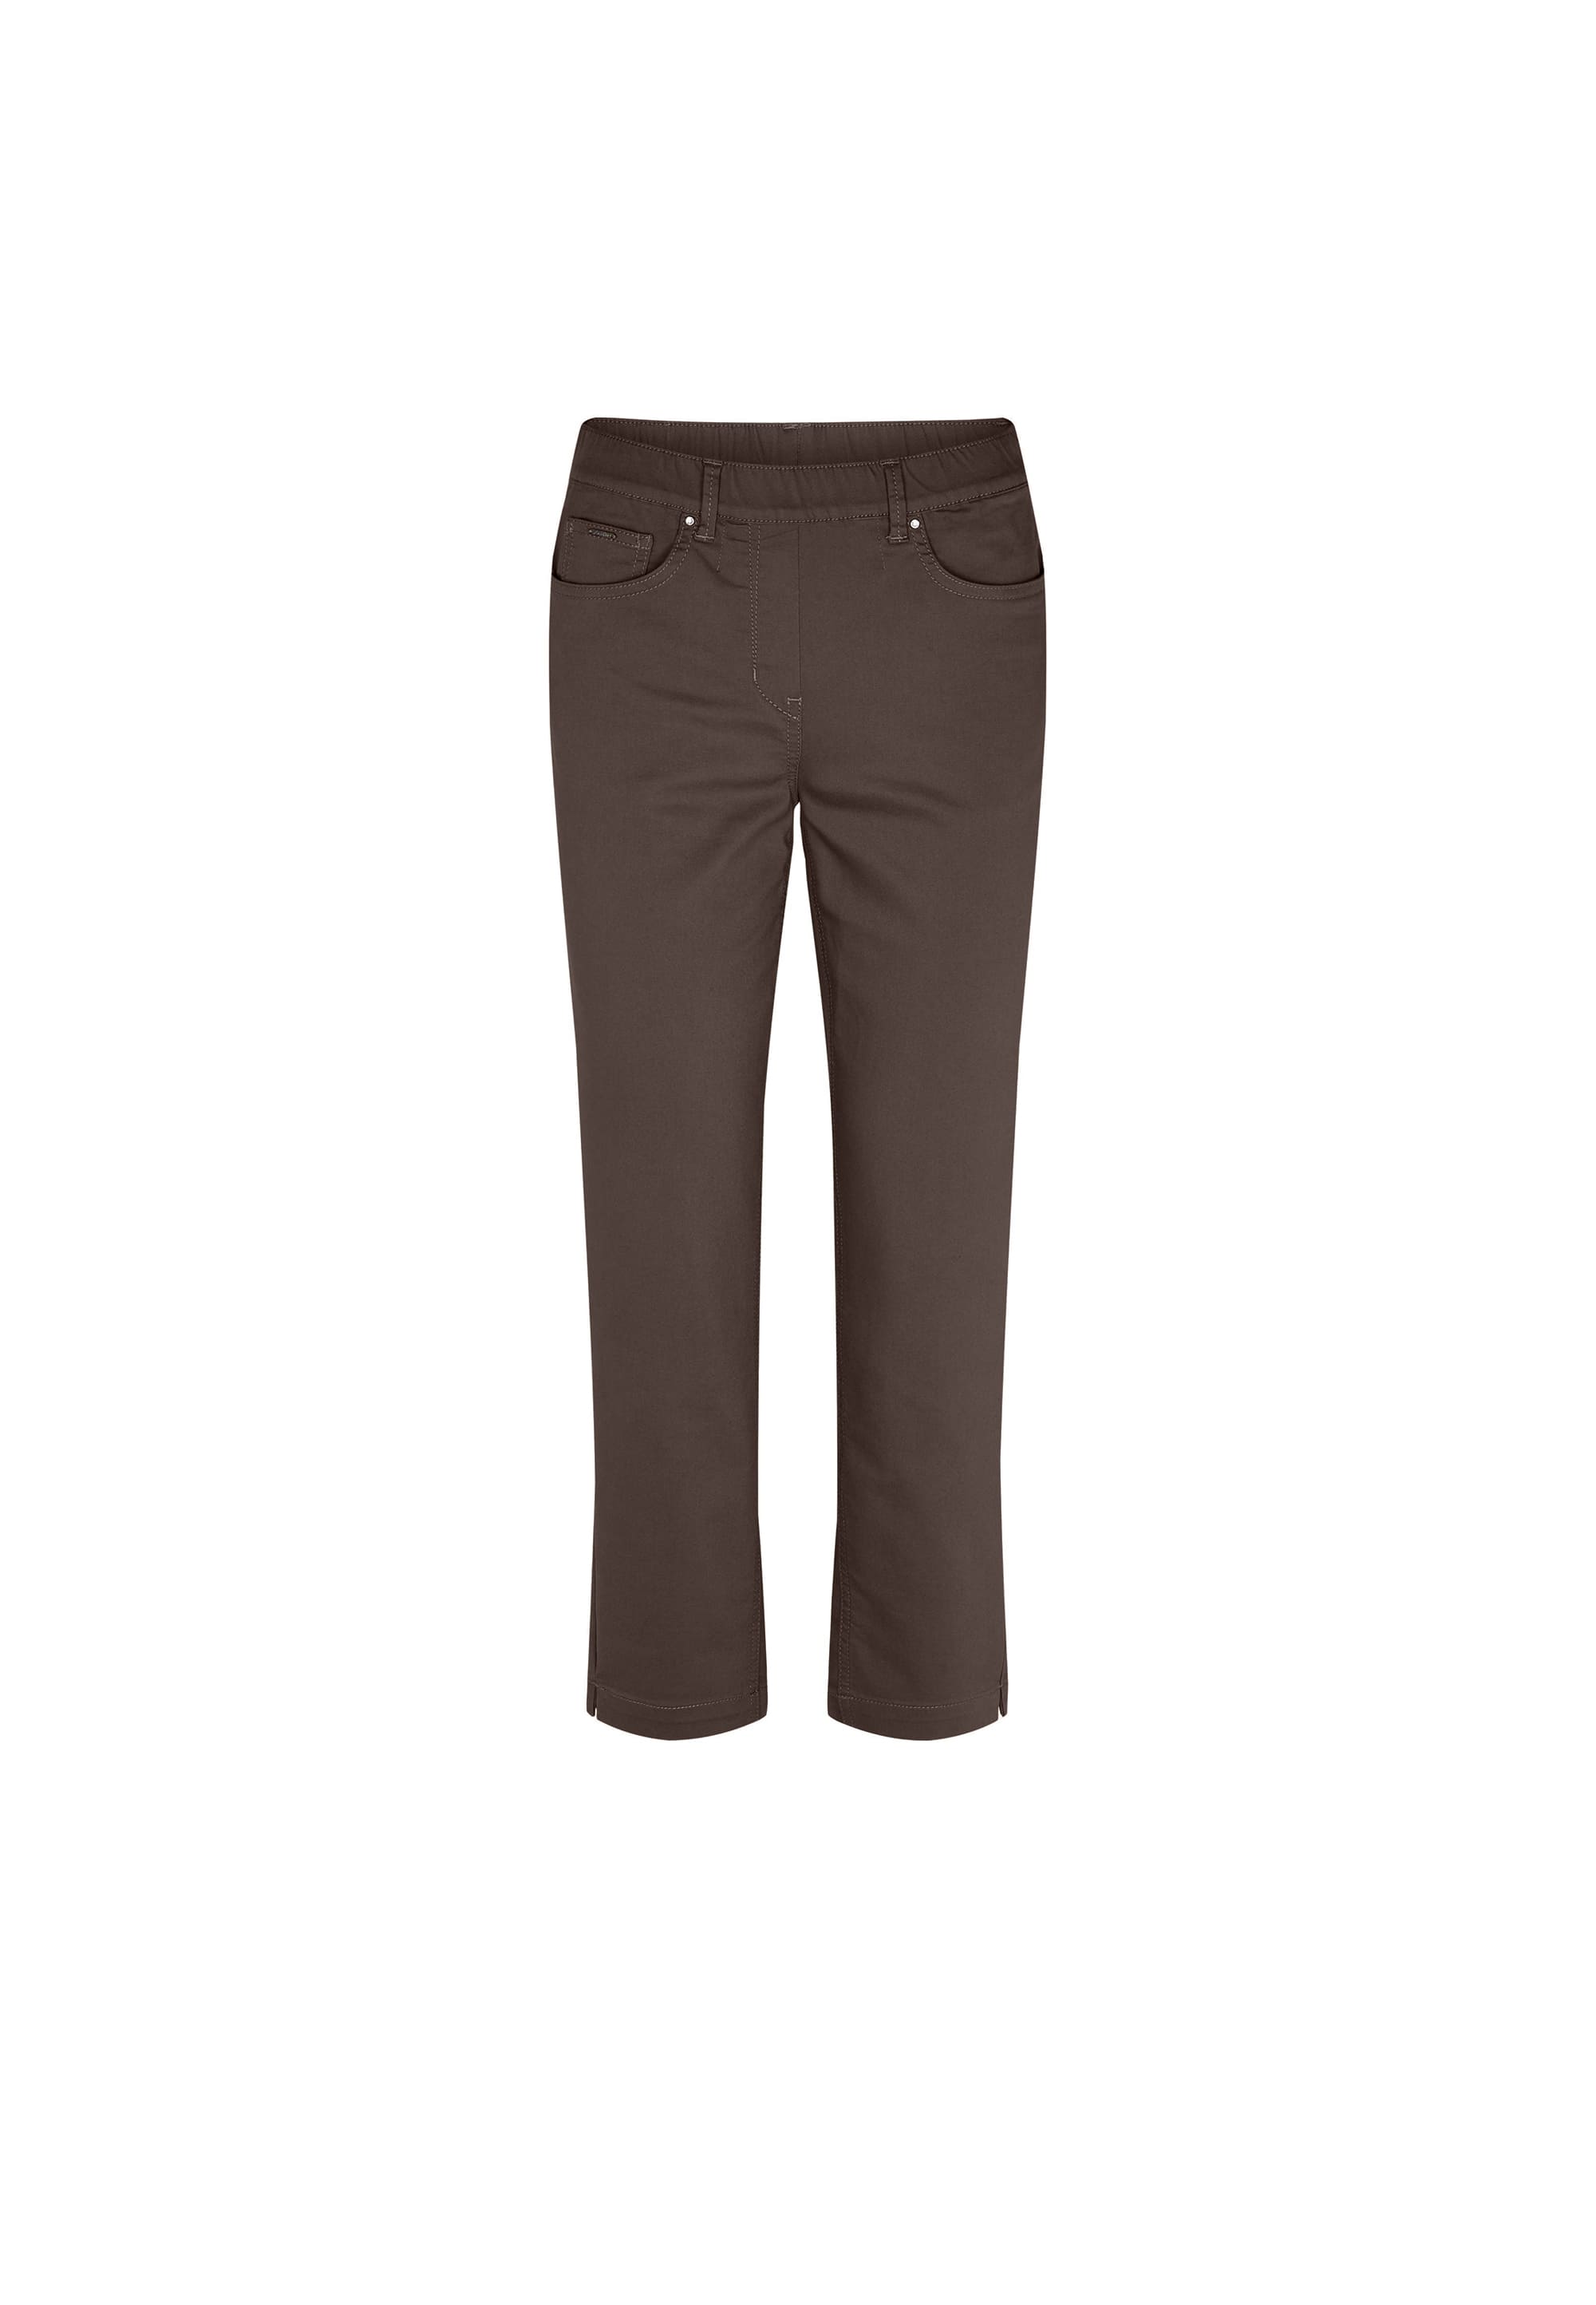 LAURIE Hannah Regular - Extra Short Length Trousers REGULAR 88000 Brown